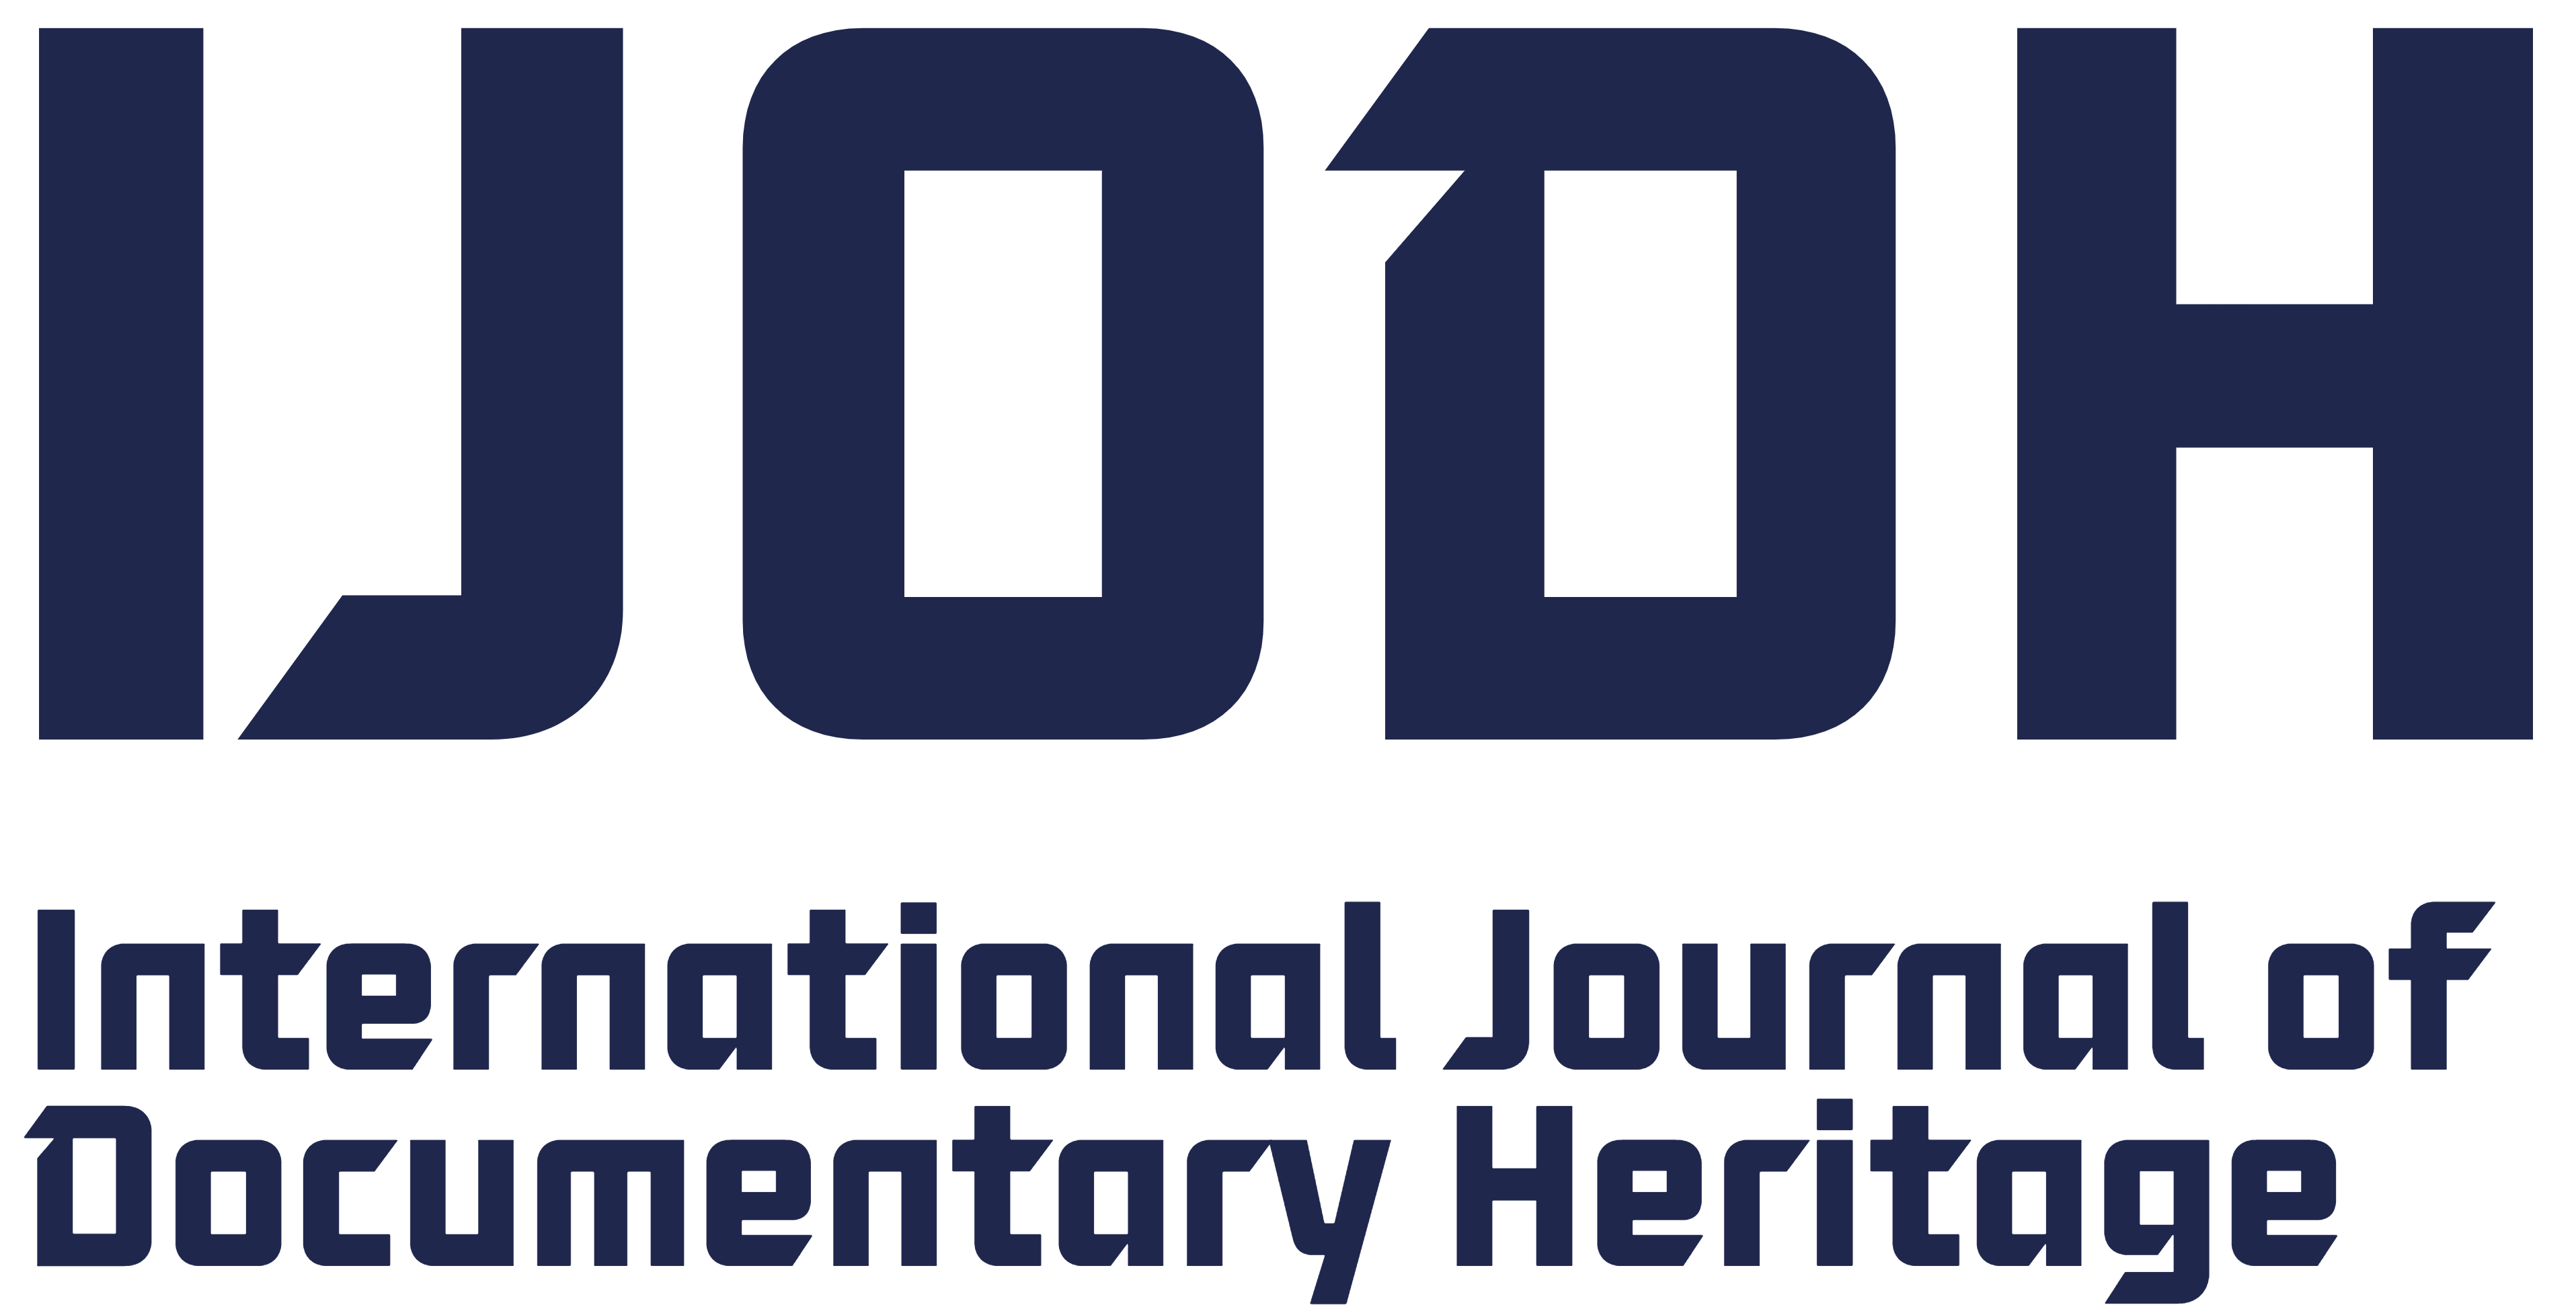 International Journal of Documentary Heritage